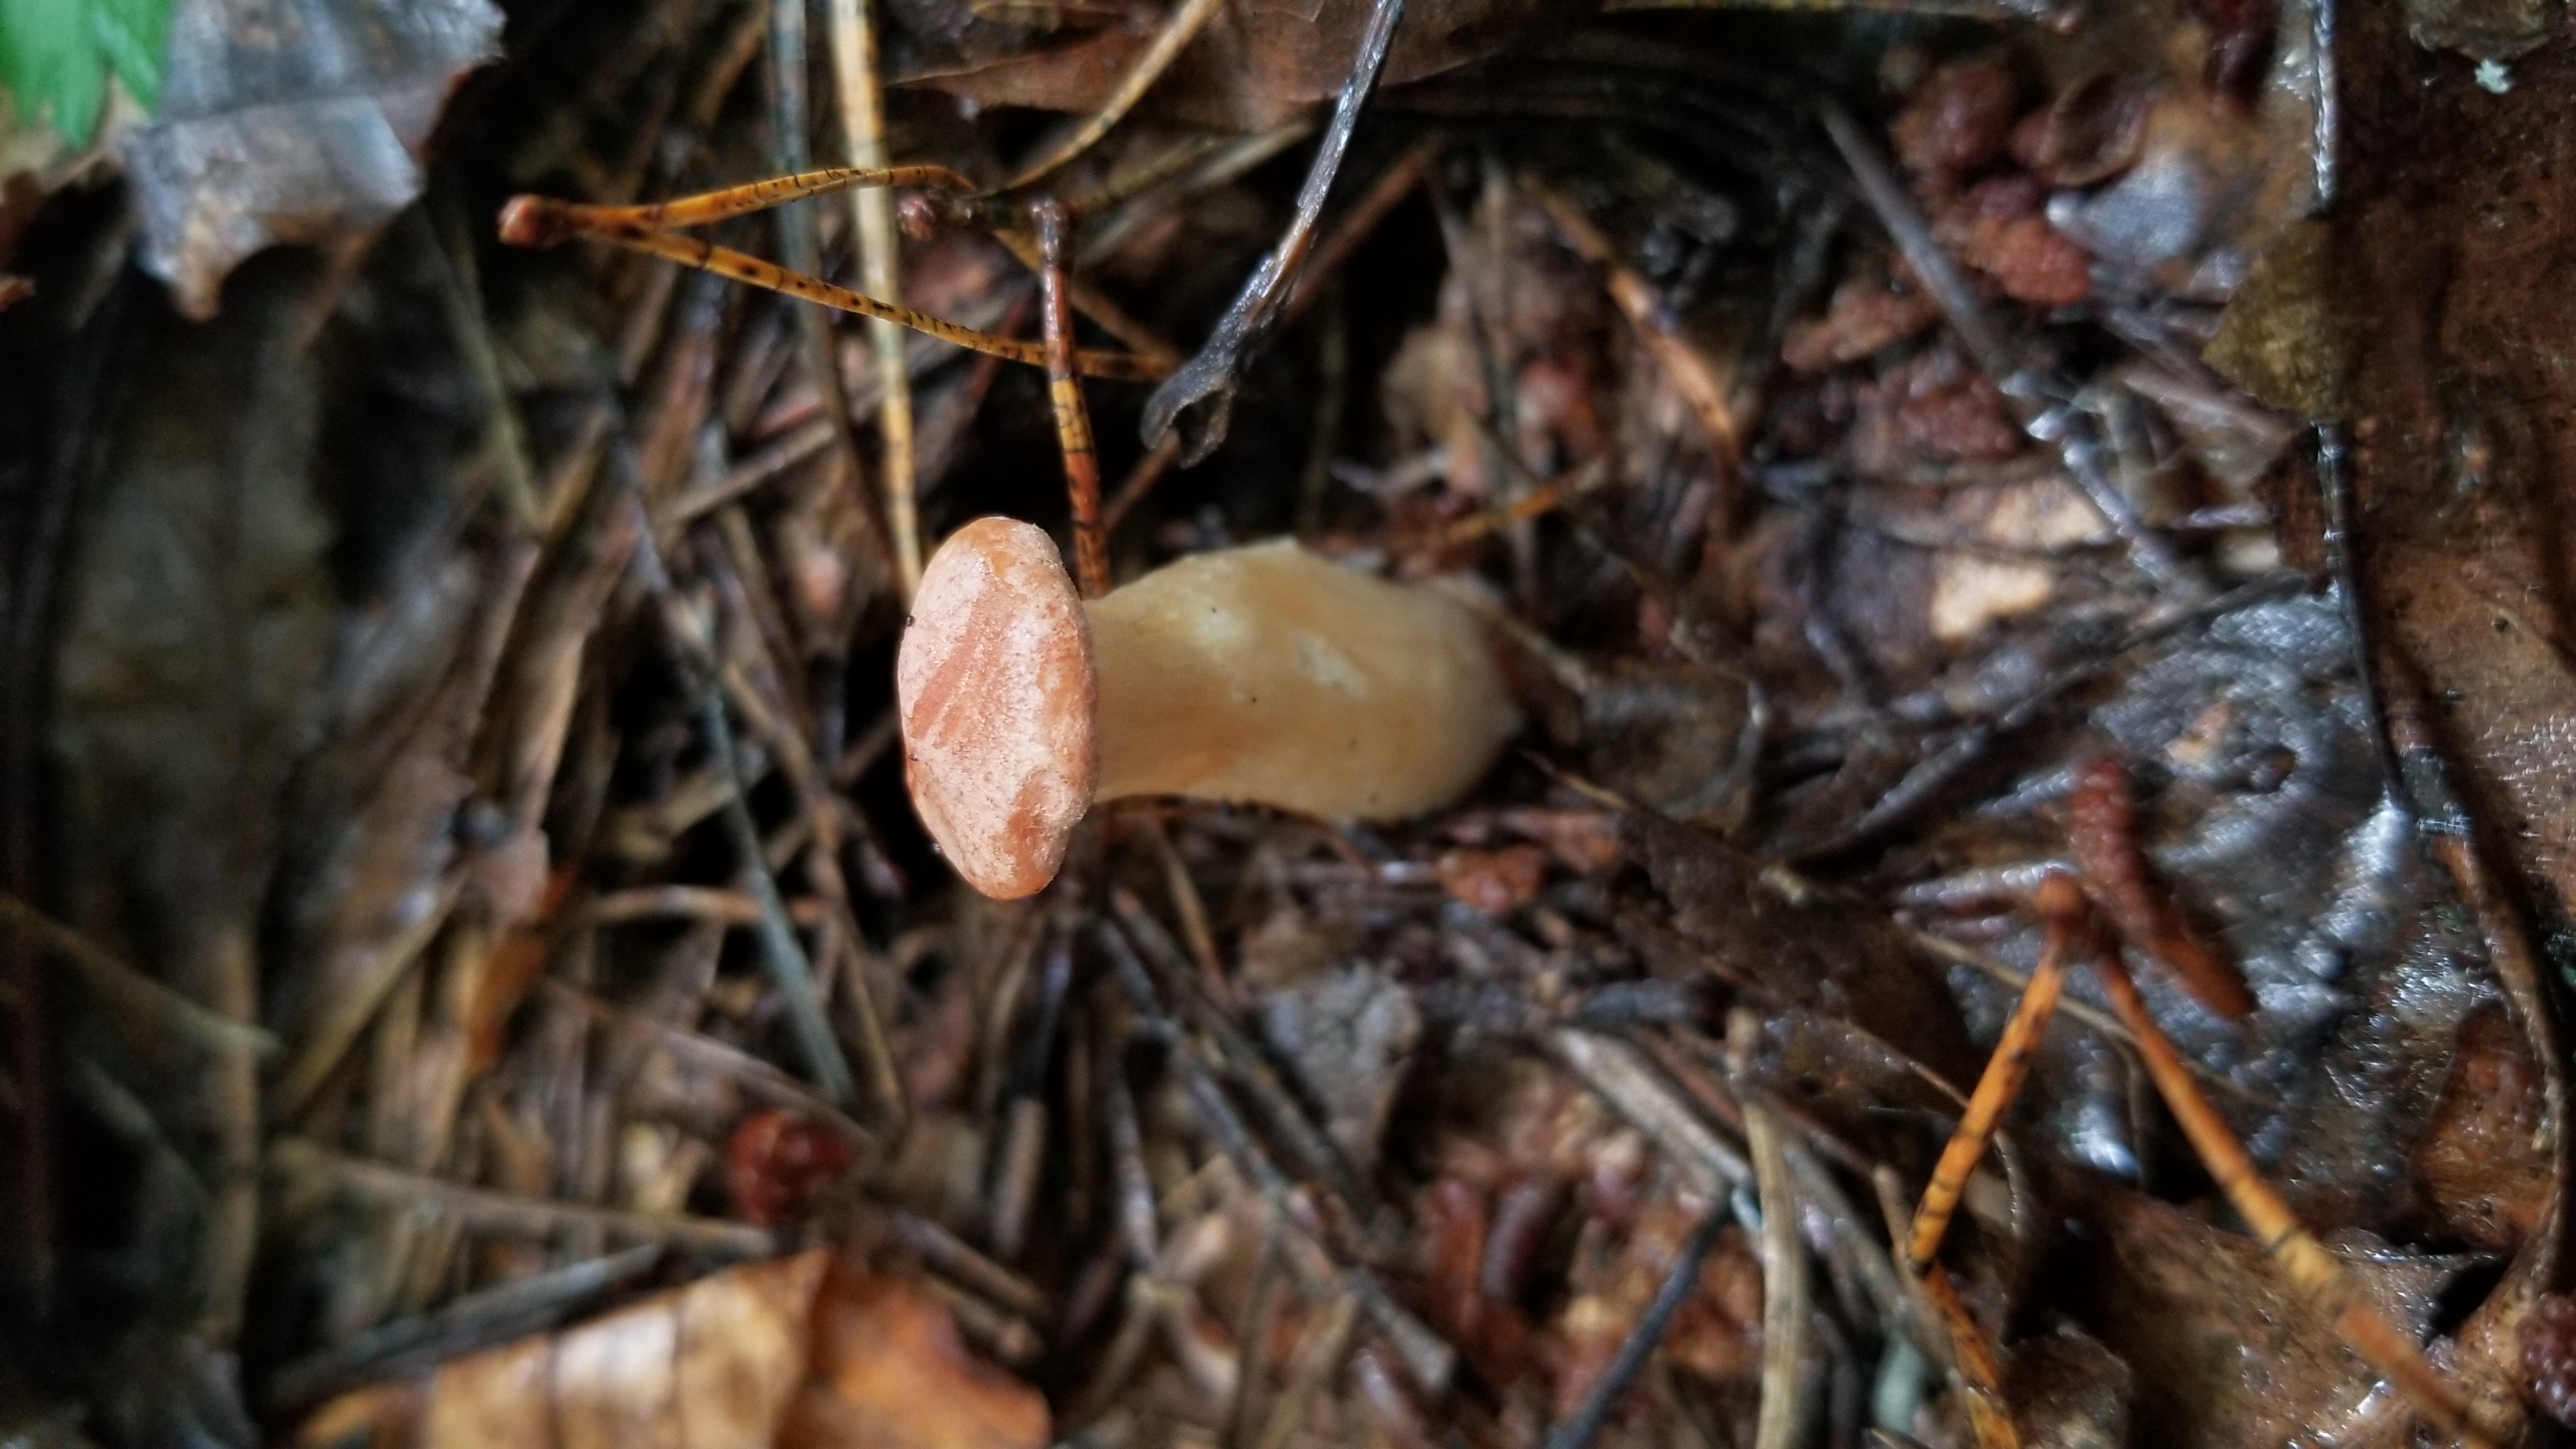 A small mushroom growing amongst pines.